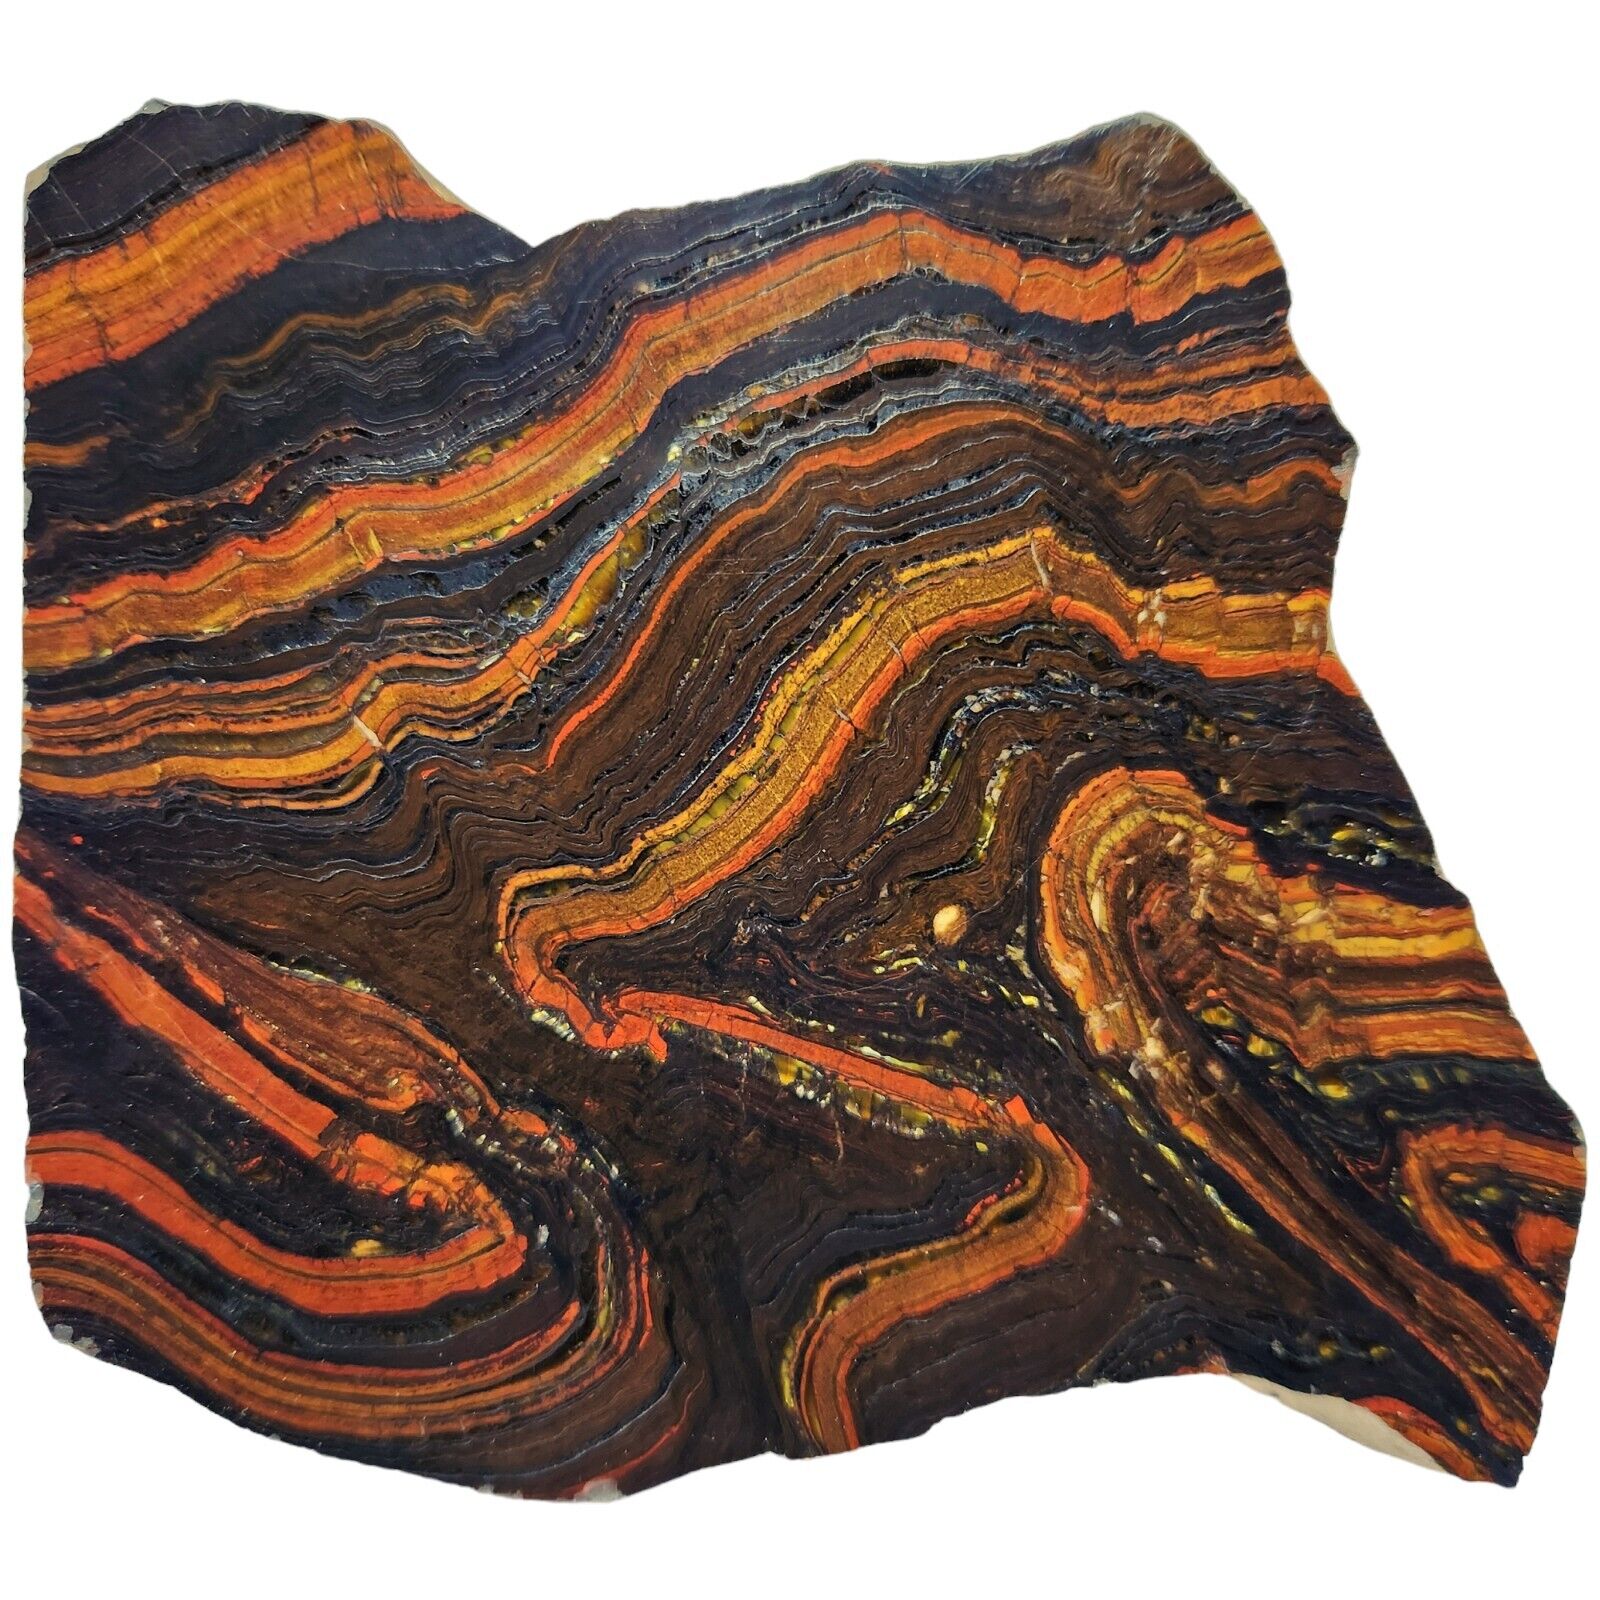 Polished Banded Iron Formation Slab, Tiger Iron Jasper Chert BIF Australia, 838g